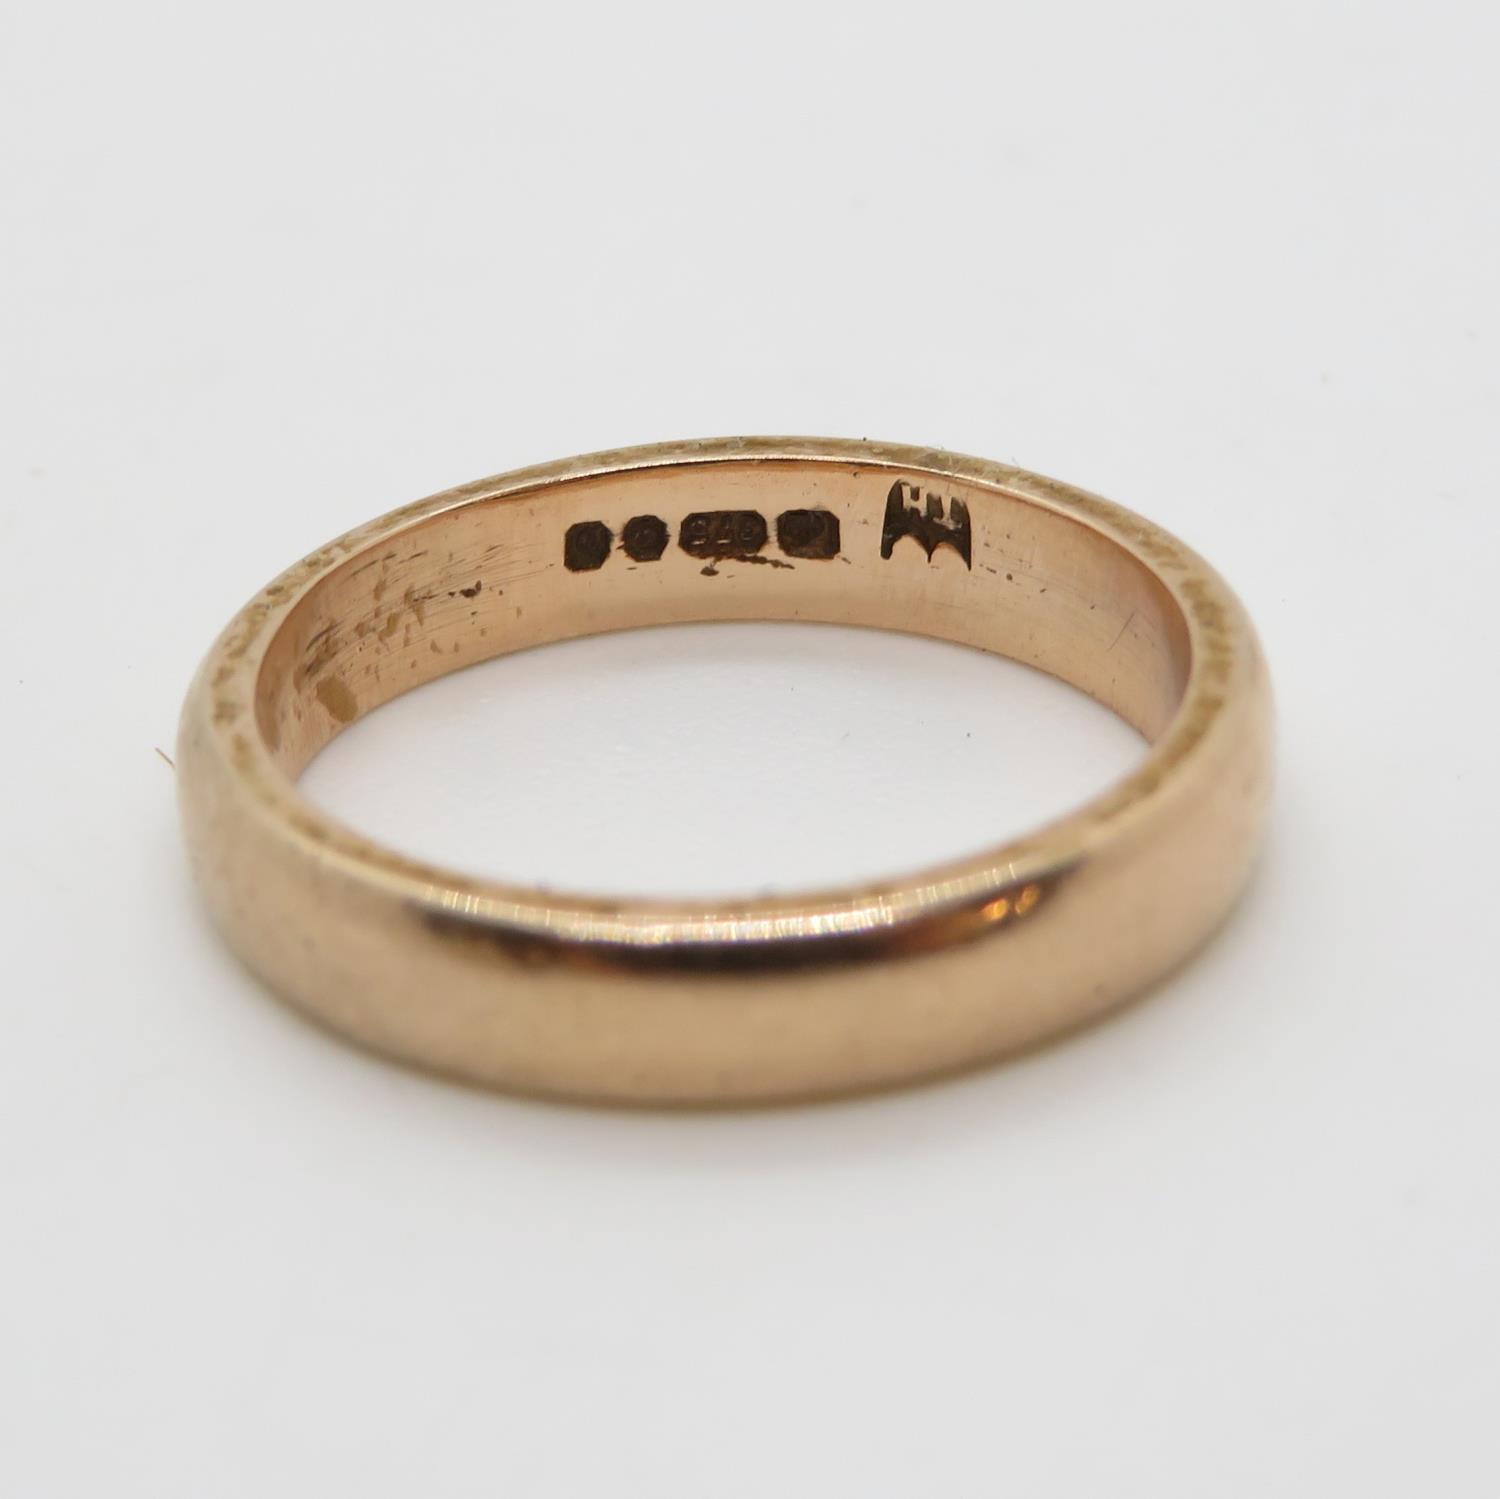 2.8g rose 9ct gold ring size J - Image 3 of 3